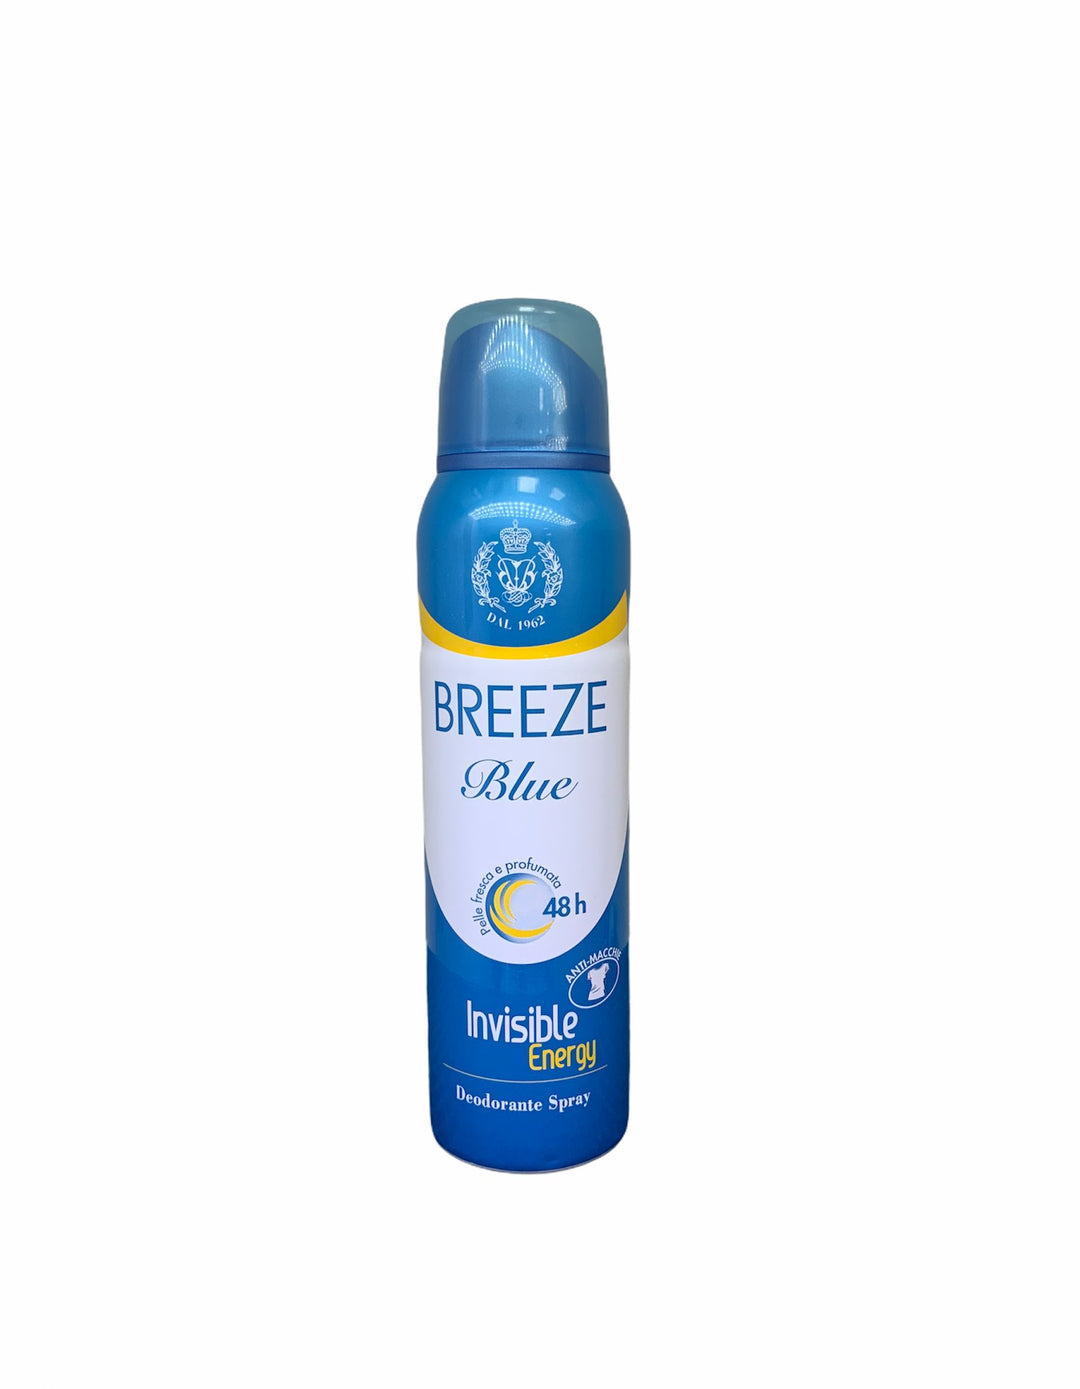 Breeze deodorante spray blue energy invisible 150 ml